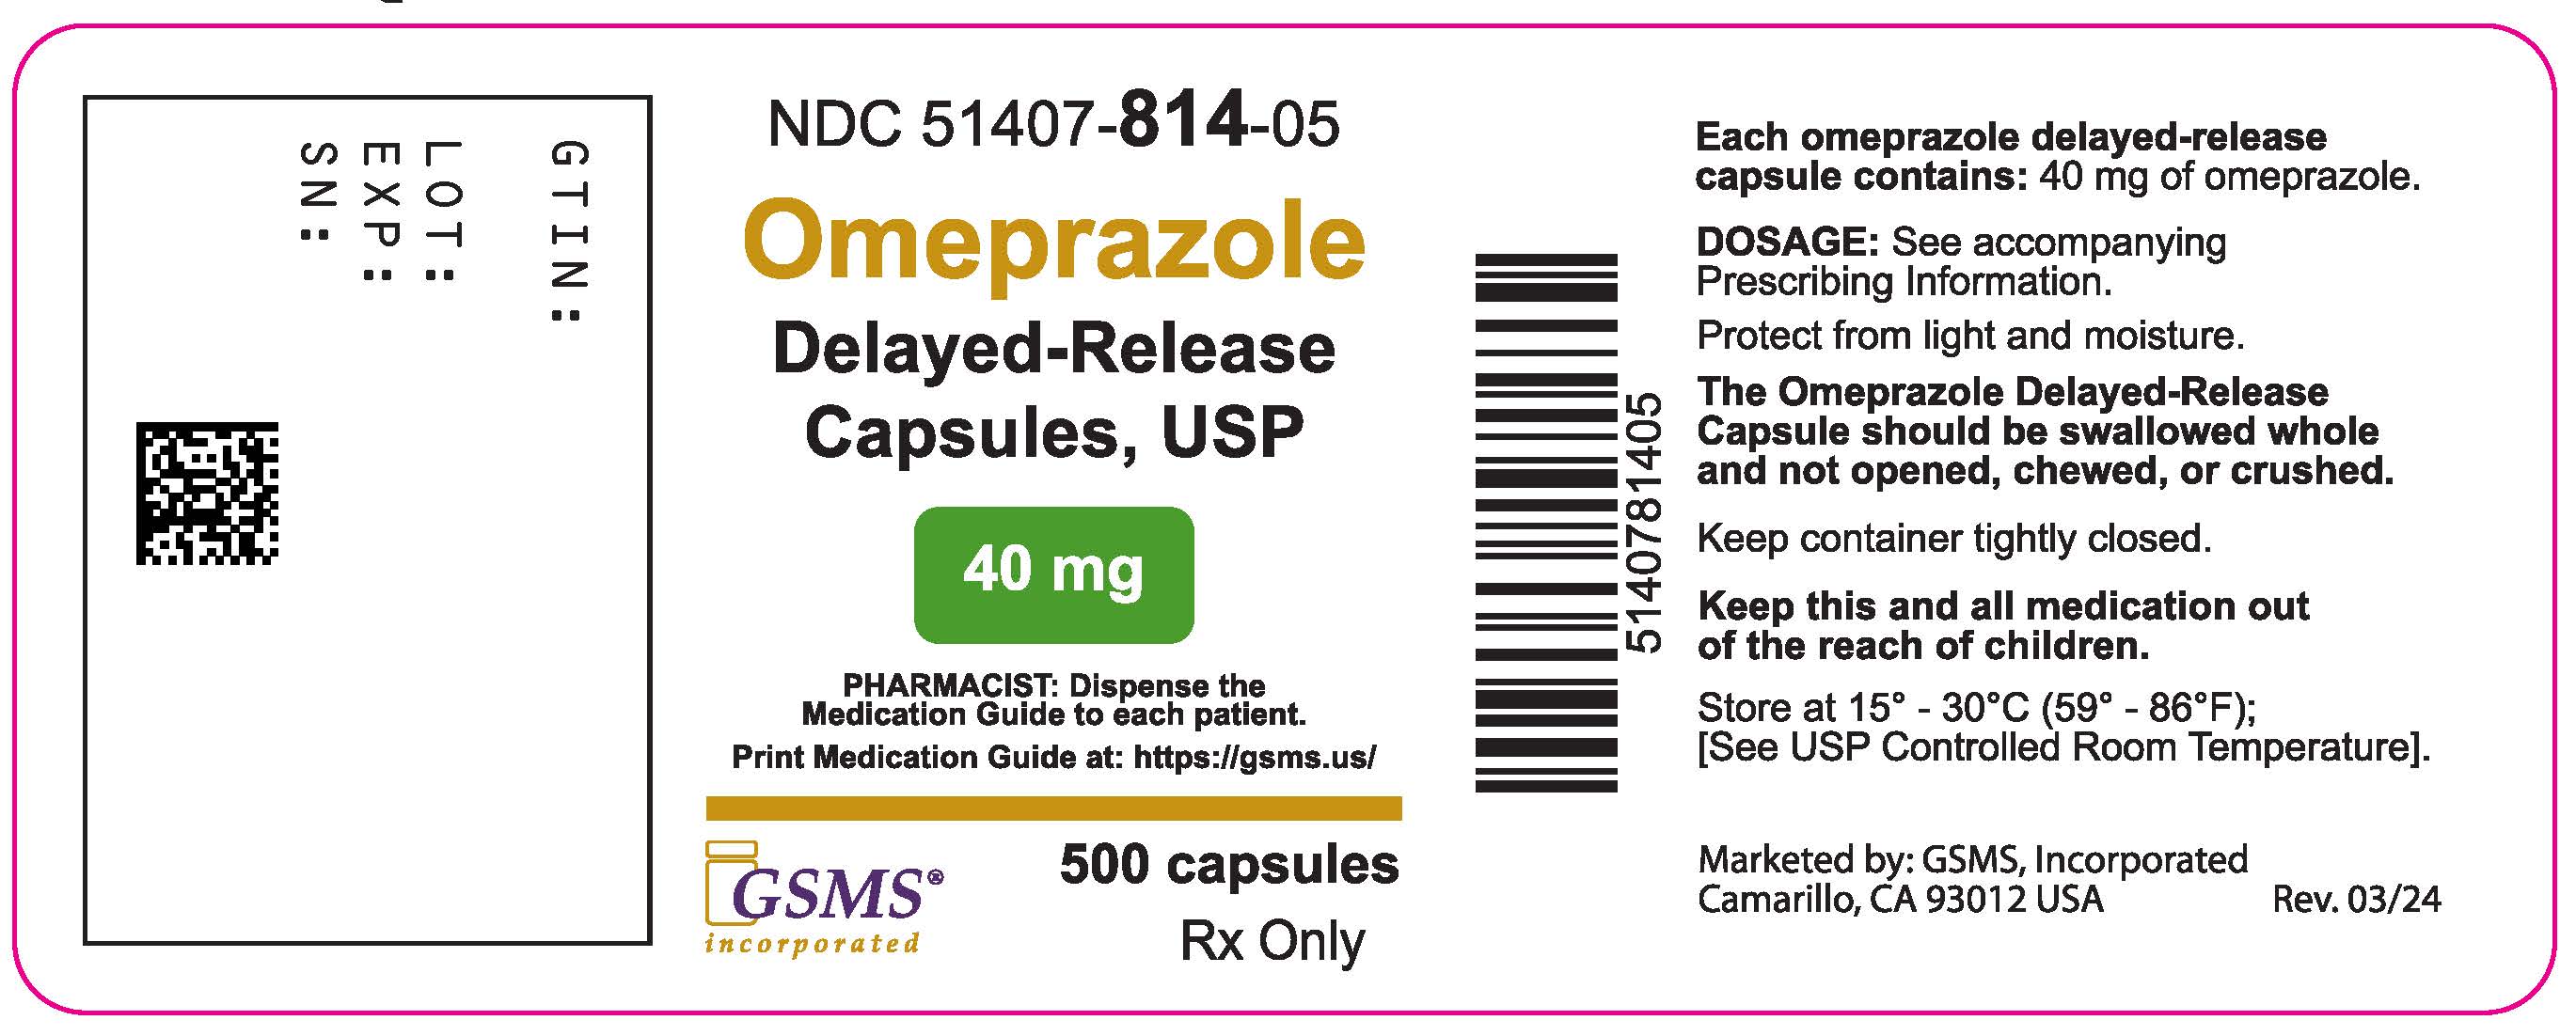 51407-814-05LB - Omeprazole 40 mg - Rev. 0324.jpg